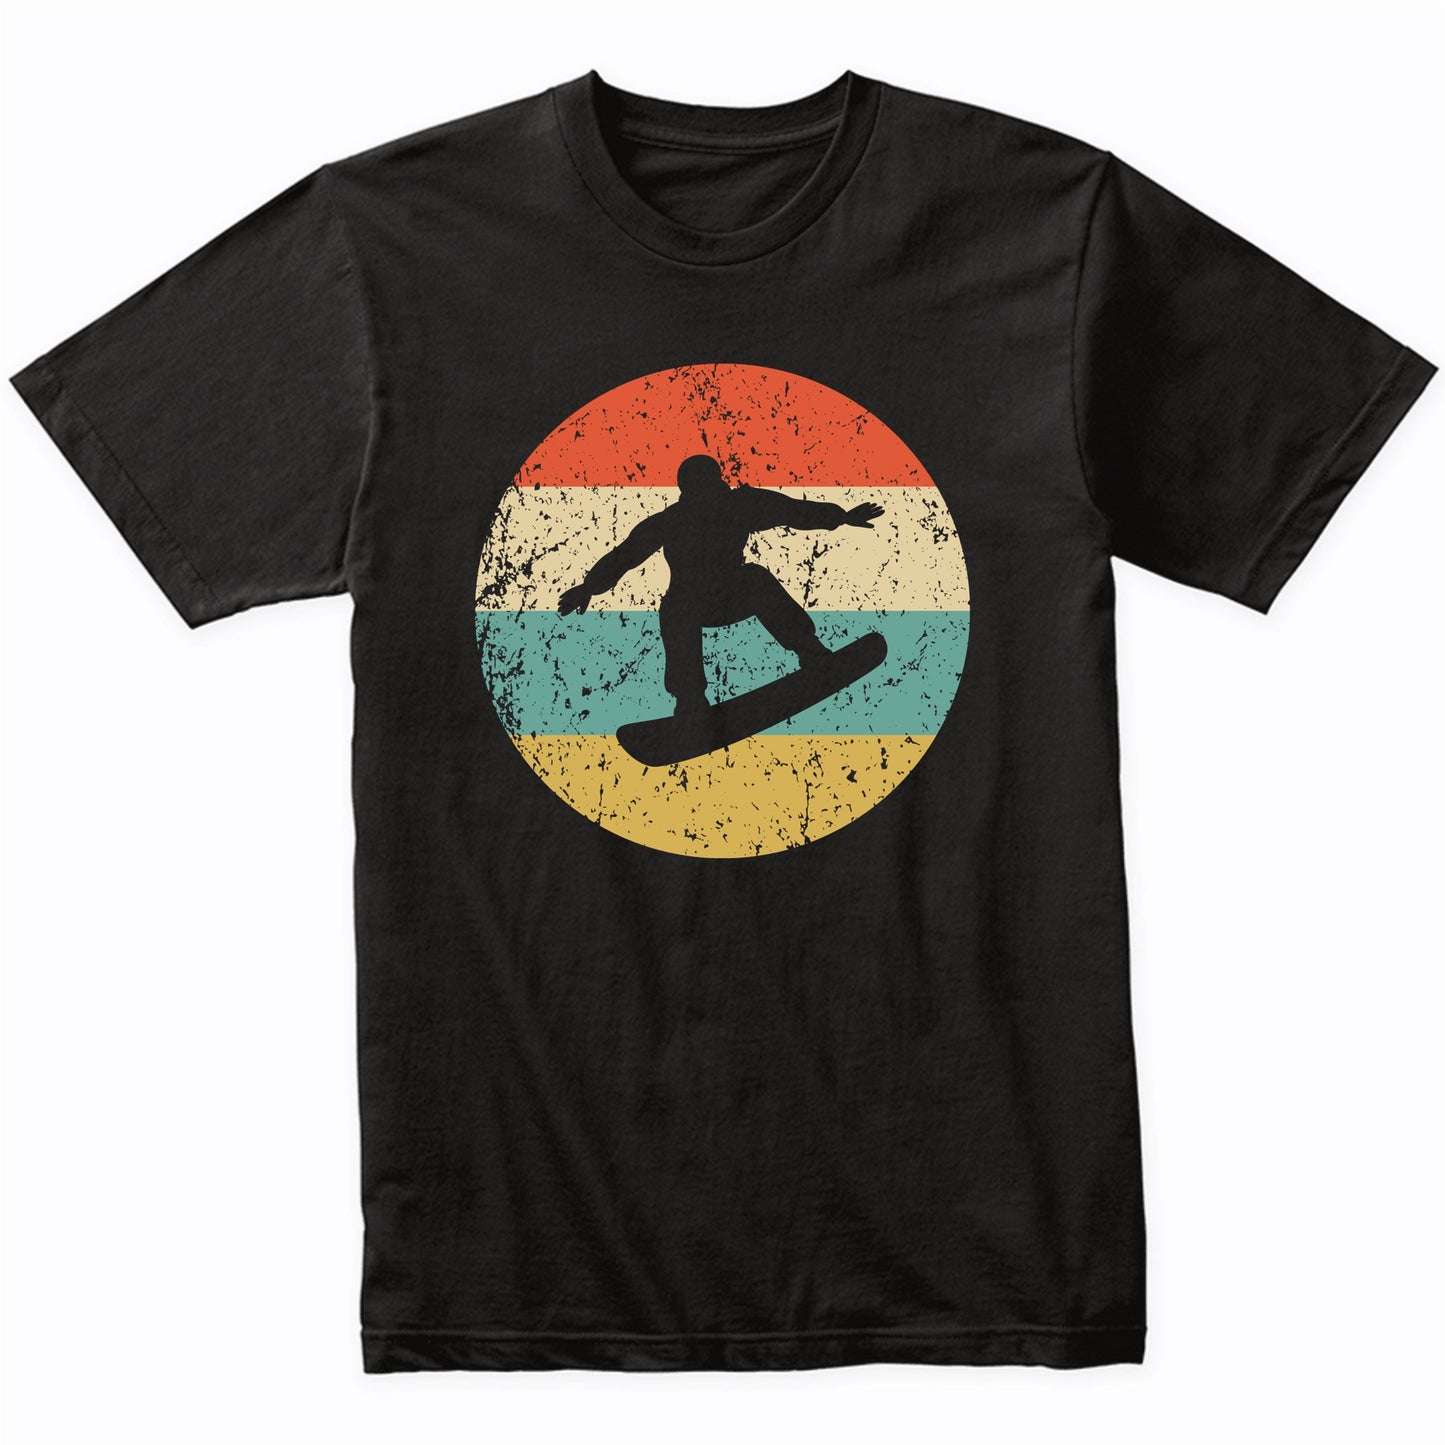 Snowboarding Shirt - Vintage Retro Snowboarder T-Shirt